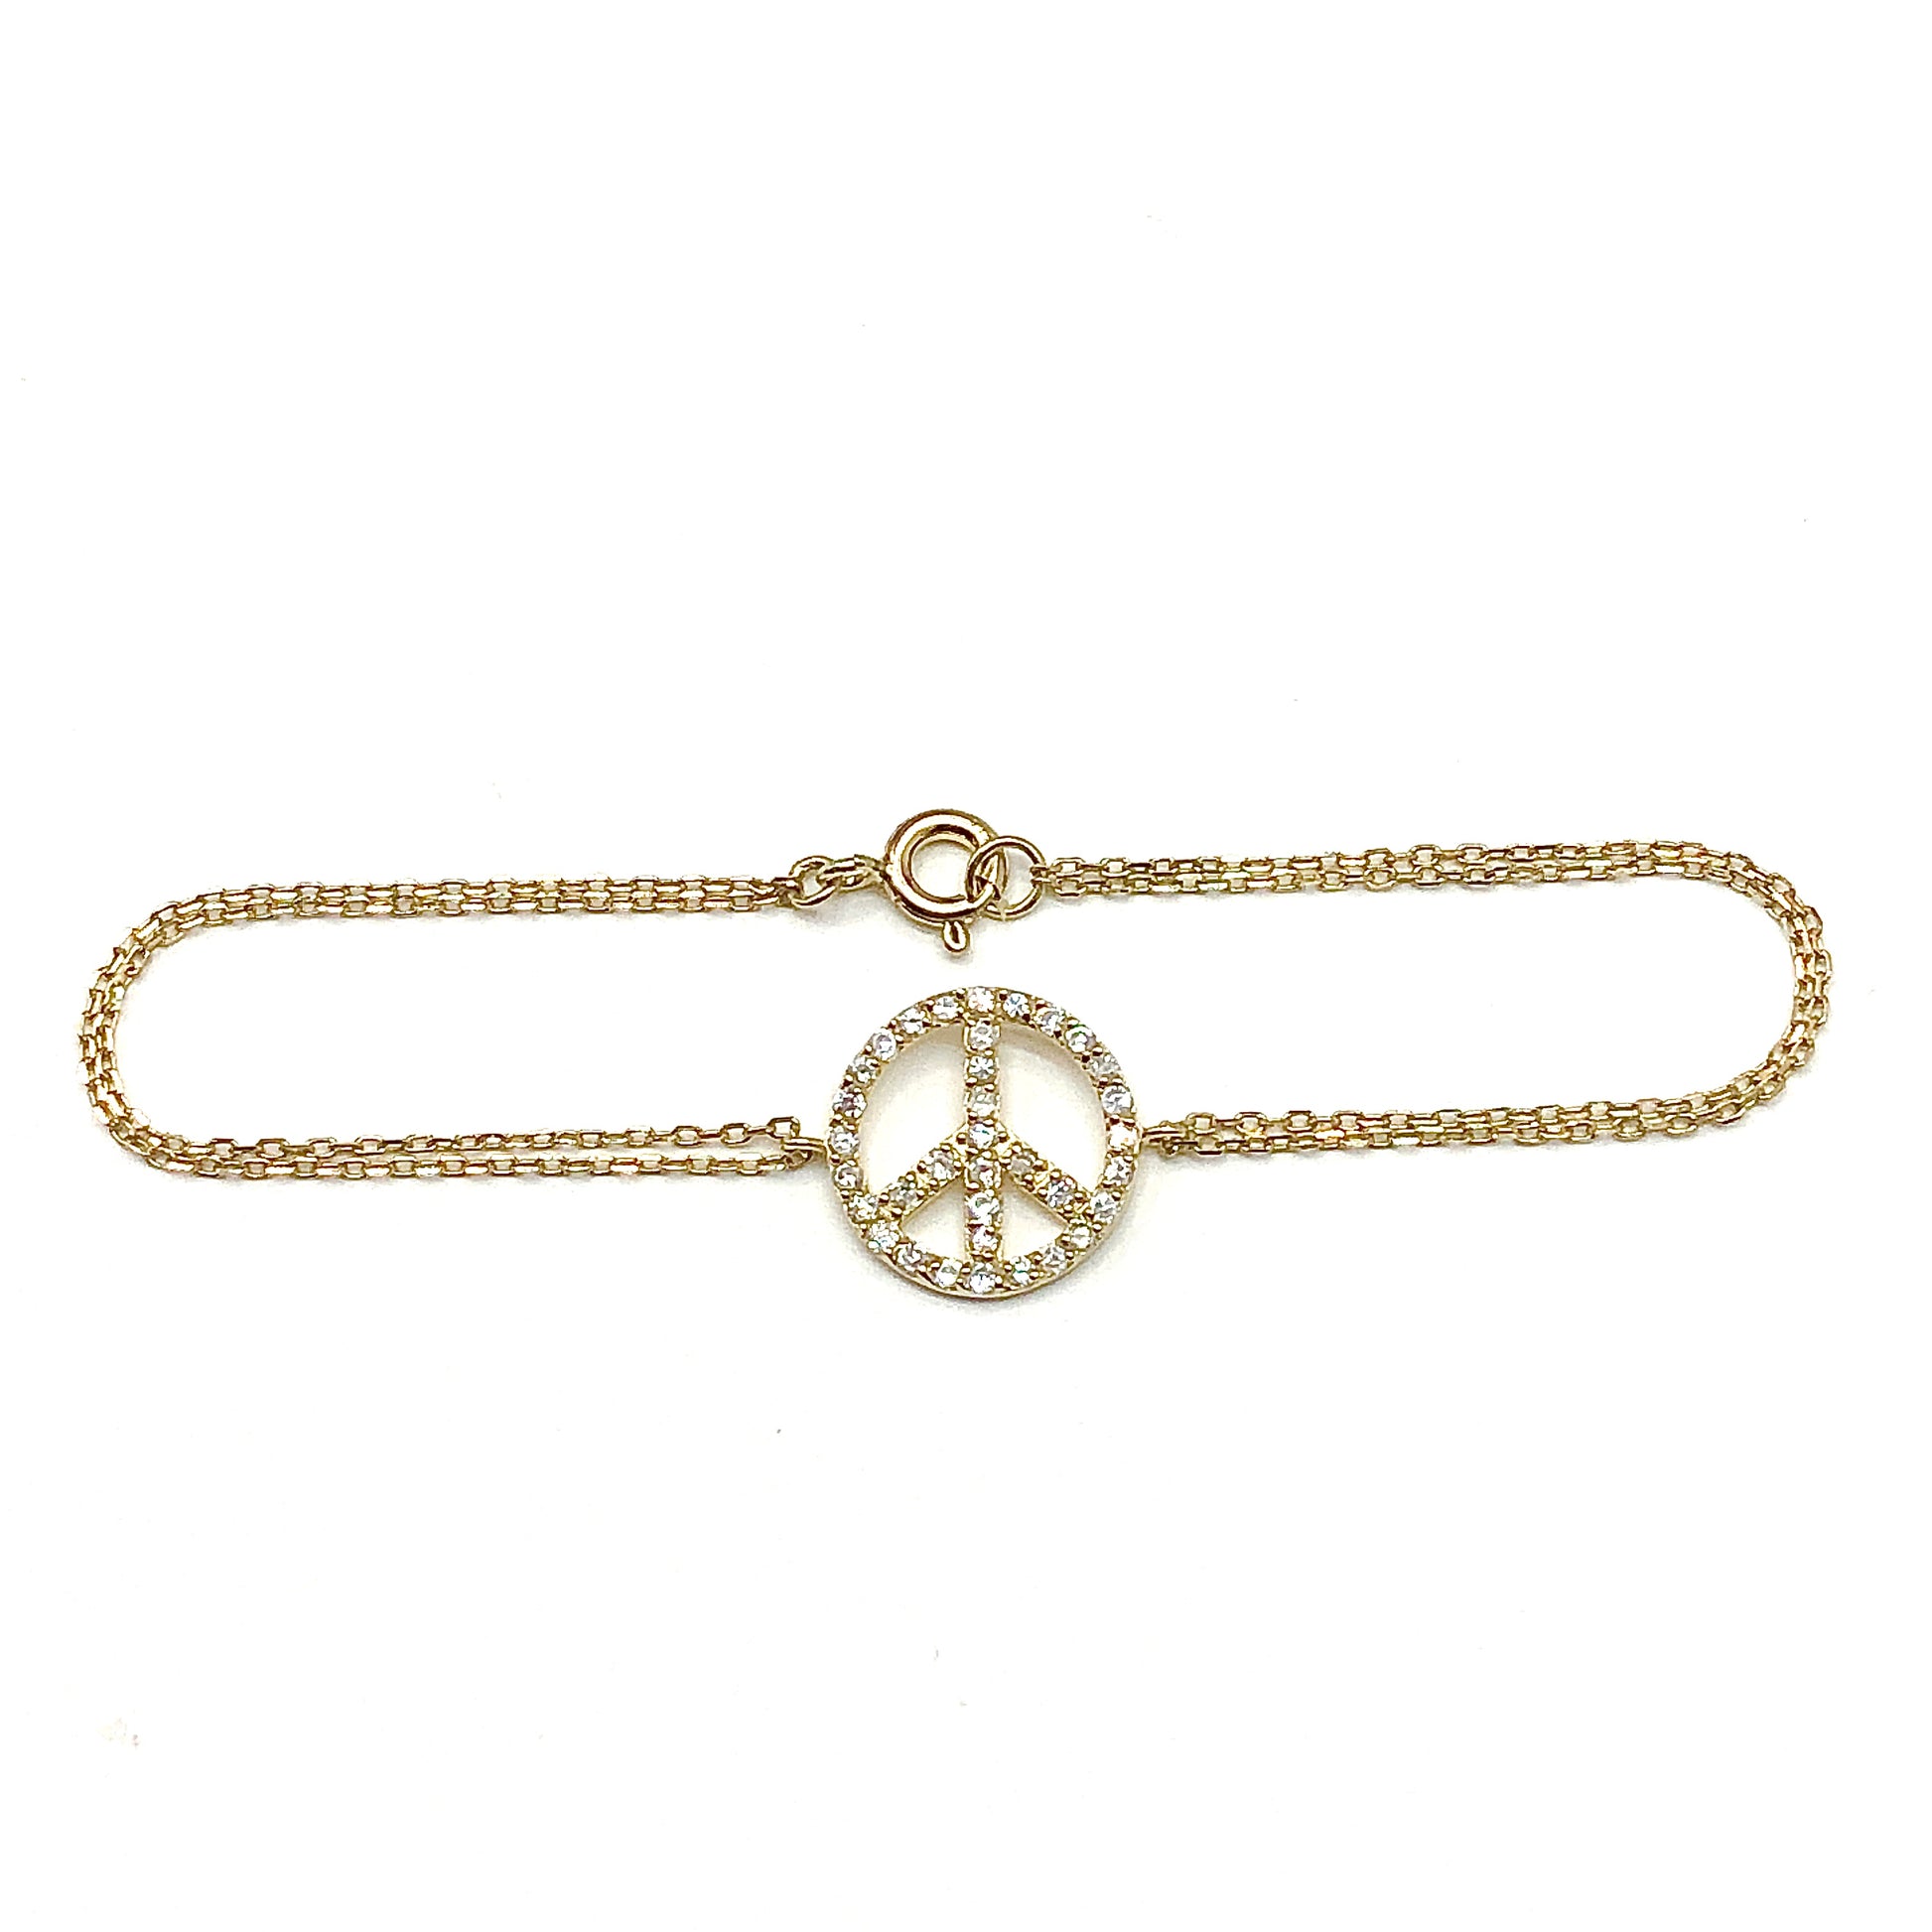 Blingschlingers Jewelry - Bracelet | Womens Sterling Silver Delicate Two Strand Gold Bracelet | Peace Symbol Jewelry